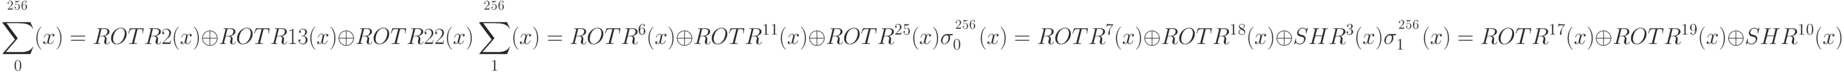 \sum _0^\left{ ^2^5^6^ \right} (x) = ROTR2 (x) \oplus ROTR13 (x) \oplus ROTR22 (x) \\
\sum _1^\left{^2^5^6^\right} (x) = ROTR^6 (x) \oplus ROTR^1^1 (x) \oplus ROTR^2^5 (x) \\
\sigma_0^\left{^2^5^6^\right} (x) = ROTR^7 (x) \oplus ROTR^1^8 (x) \oplus SHR^3 (x) \\
\sigma_1^\left{^2^5^6^\right} (x)= ROTR^1^7 (x) \oplus ROTR^1^9 (x) \oplus SHR^1^0 (x)